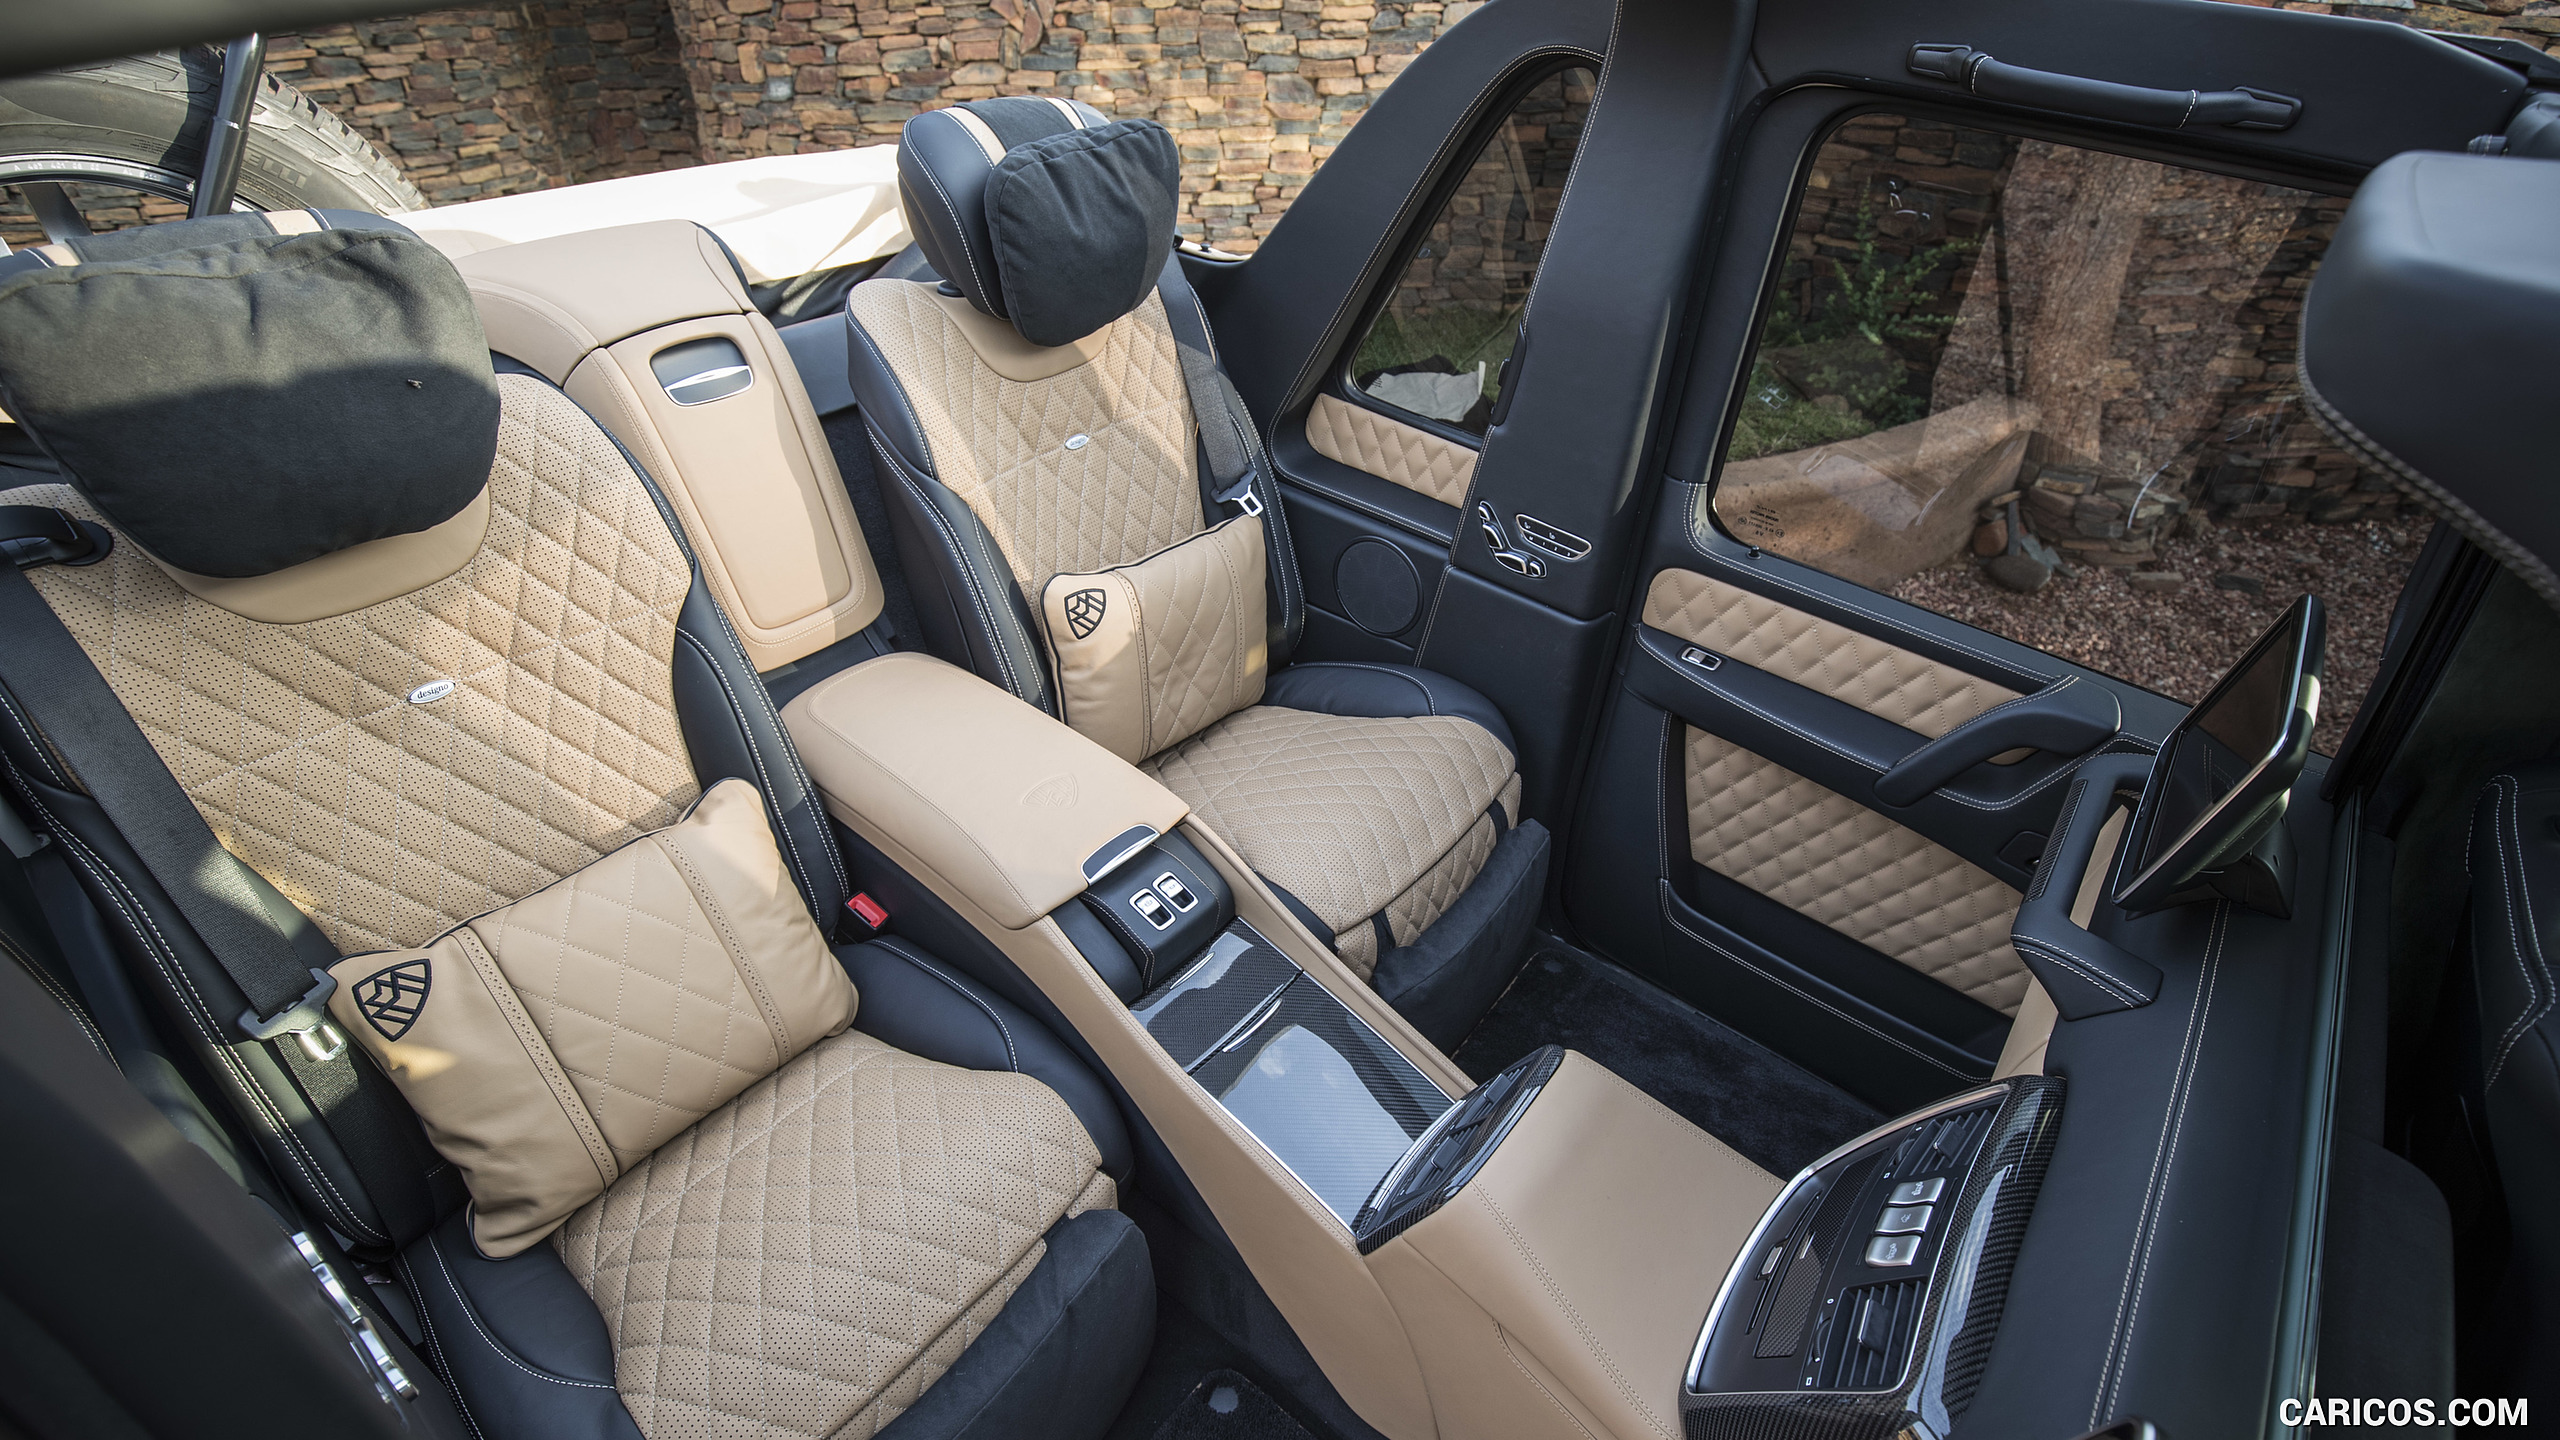 2018 Mercedes-Maybach G 650 Landaulet - Interior, Rear Seats, #12 of 59